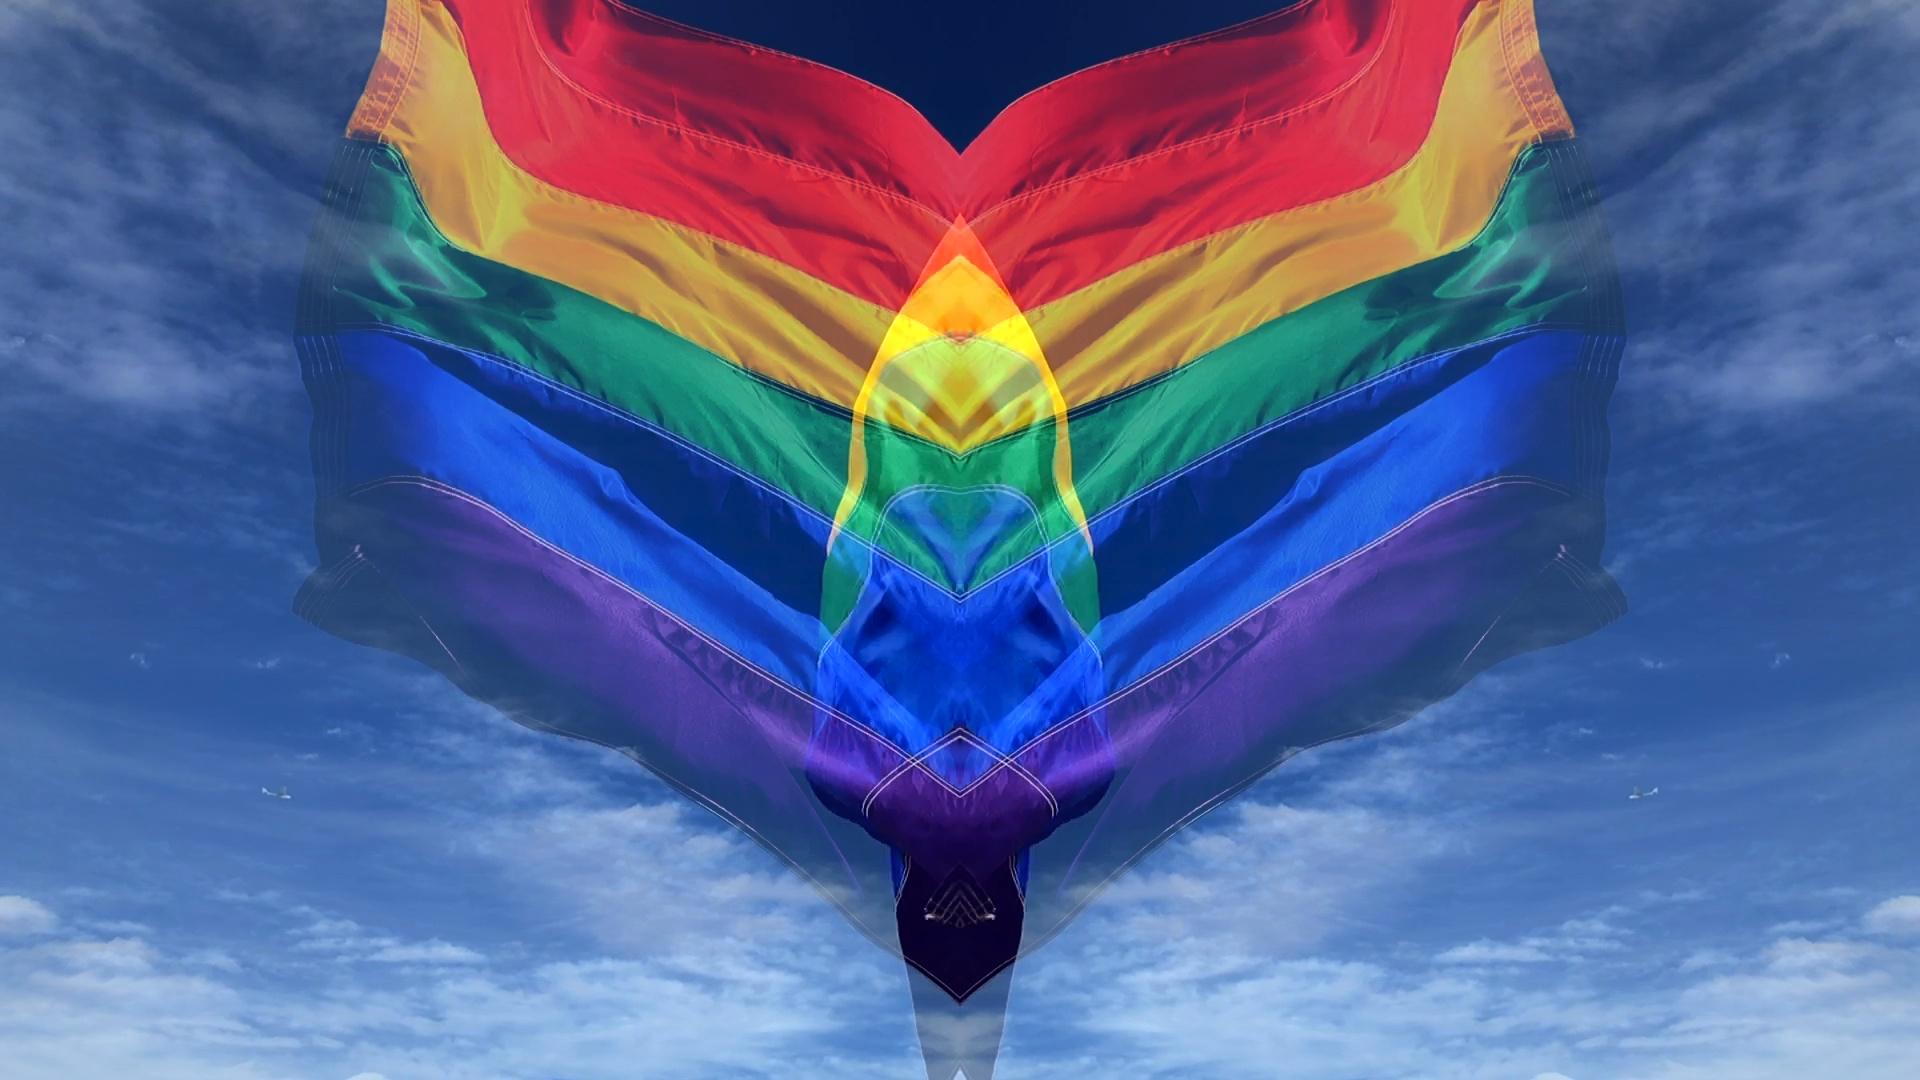 Pin on gay pride lgbt equality